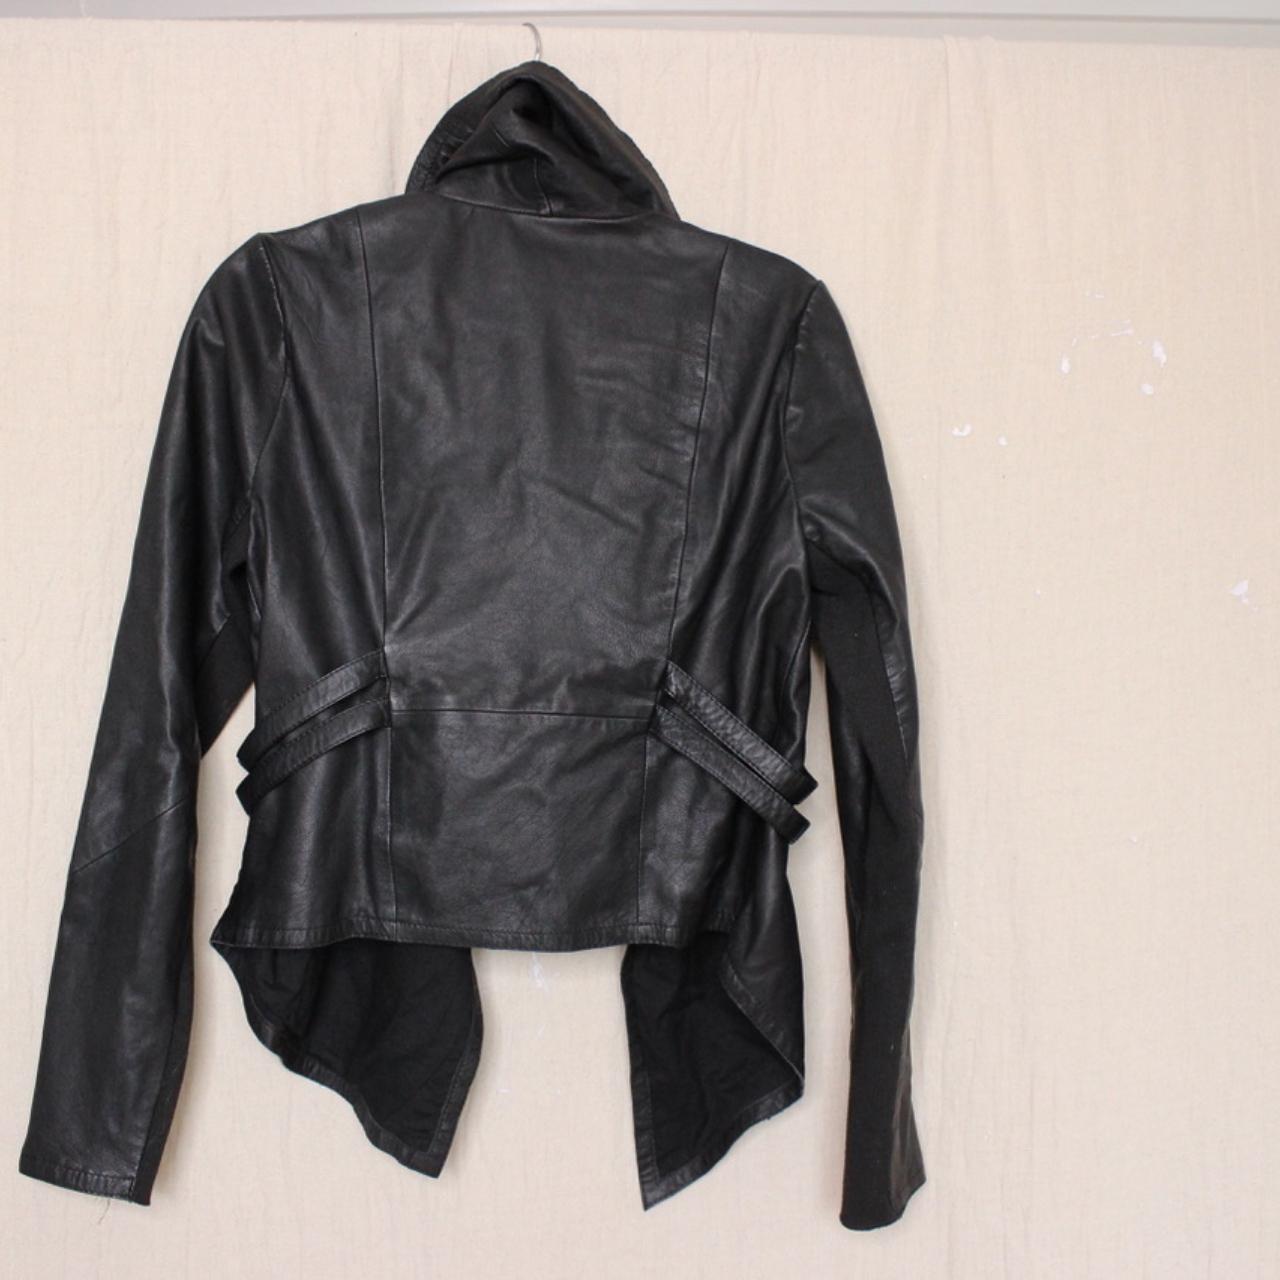 Kill City Black Leather Jacket with funnel neck,... - Depop